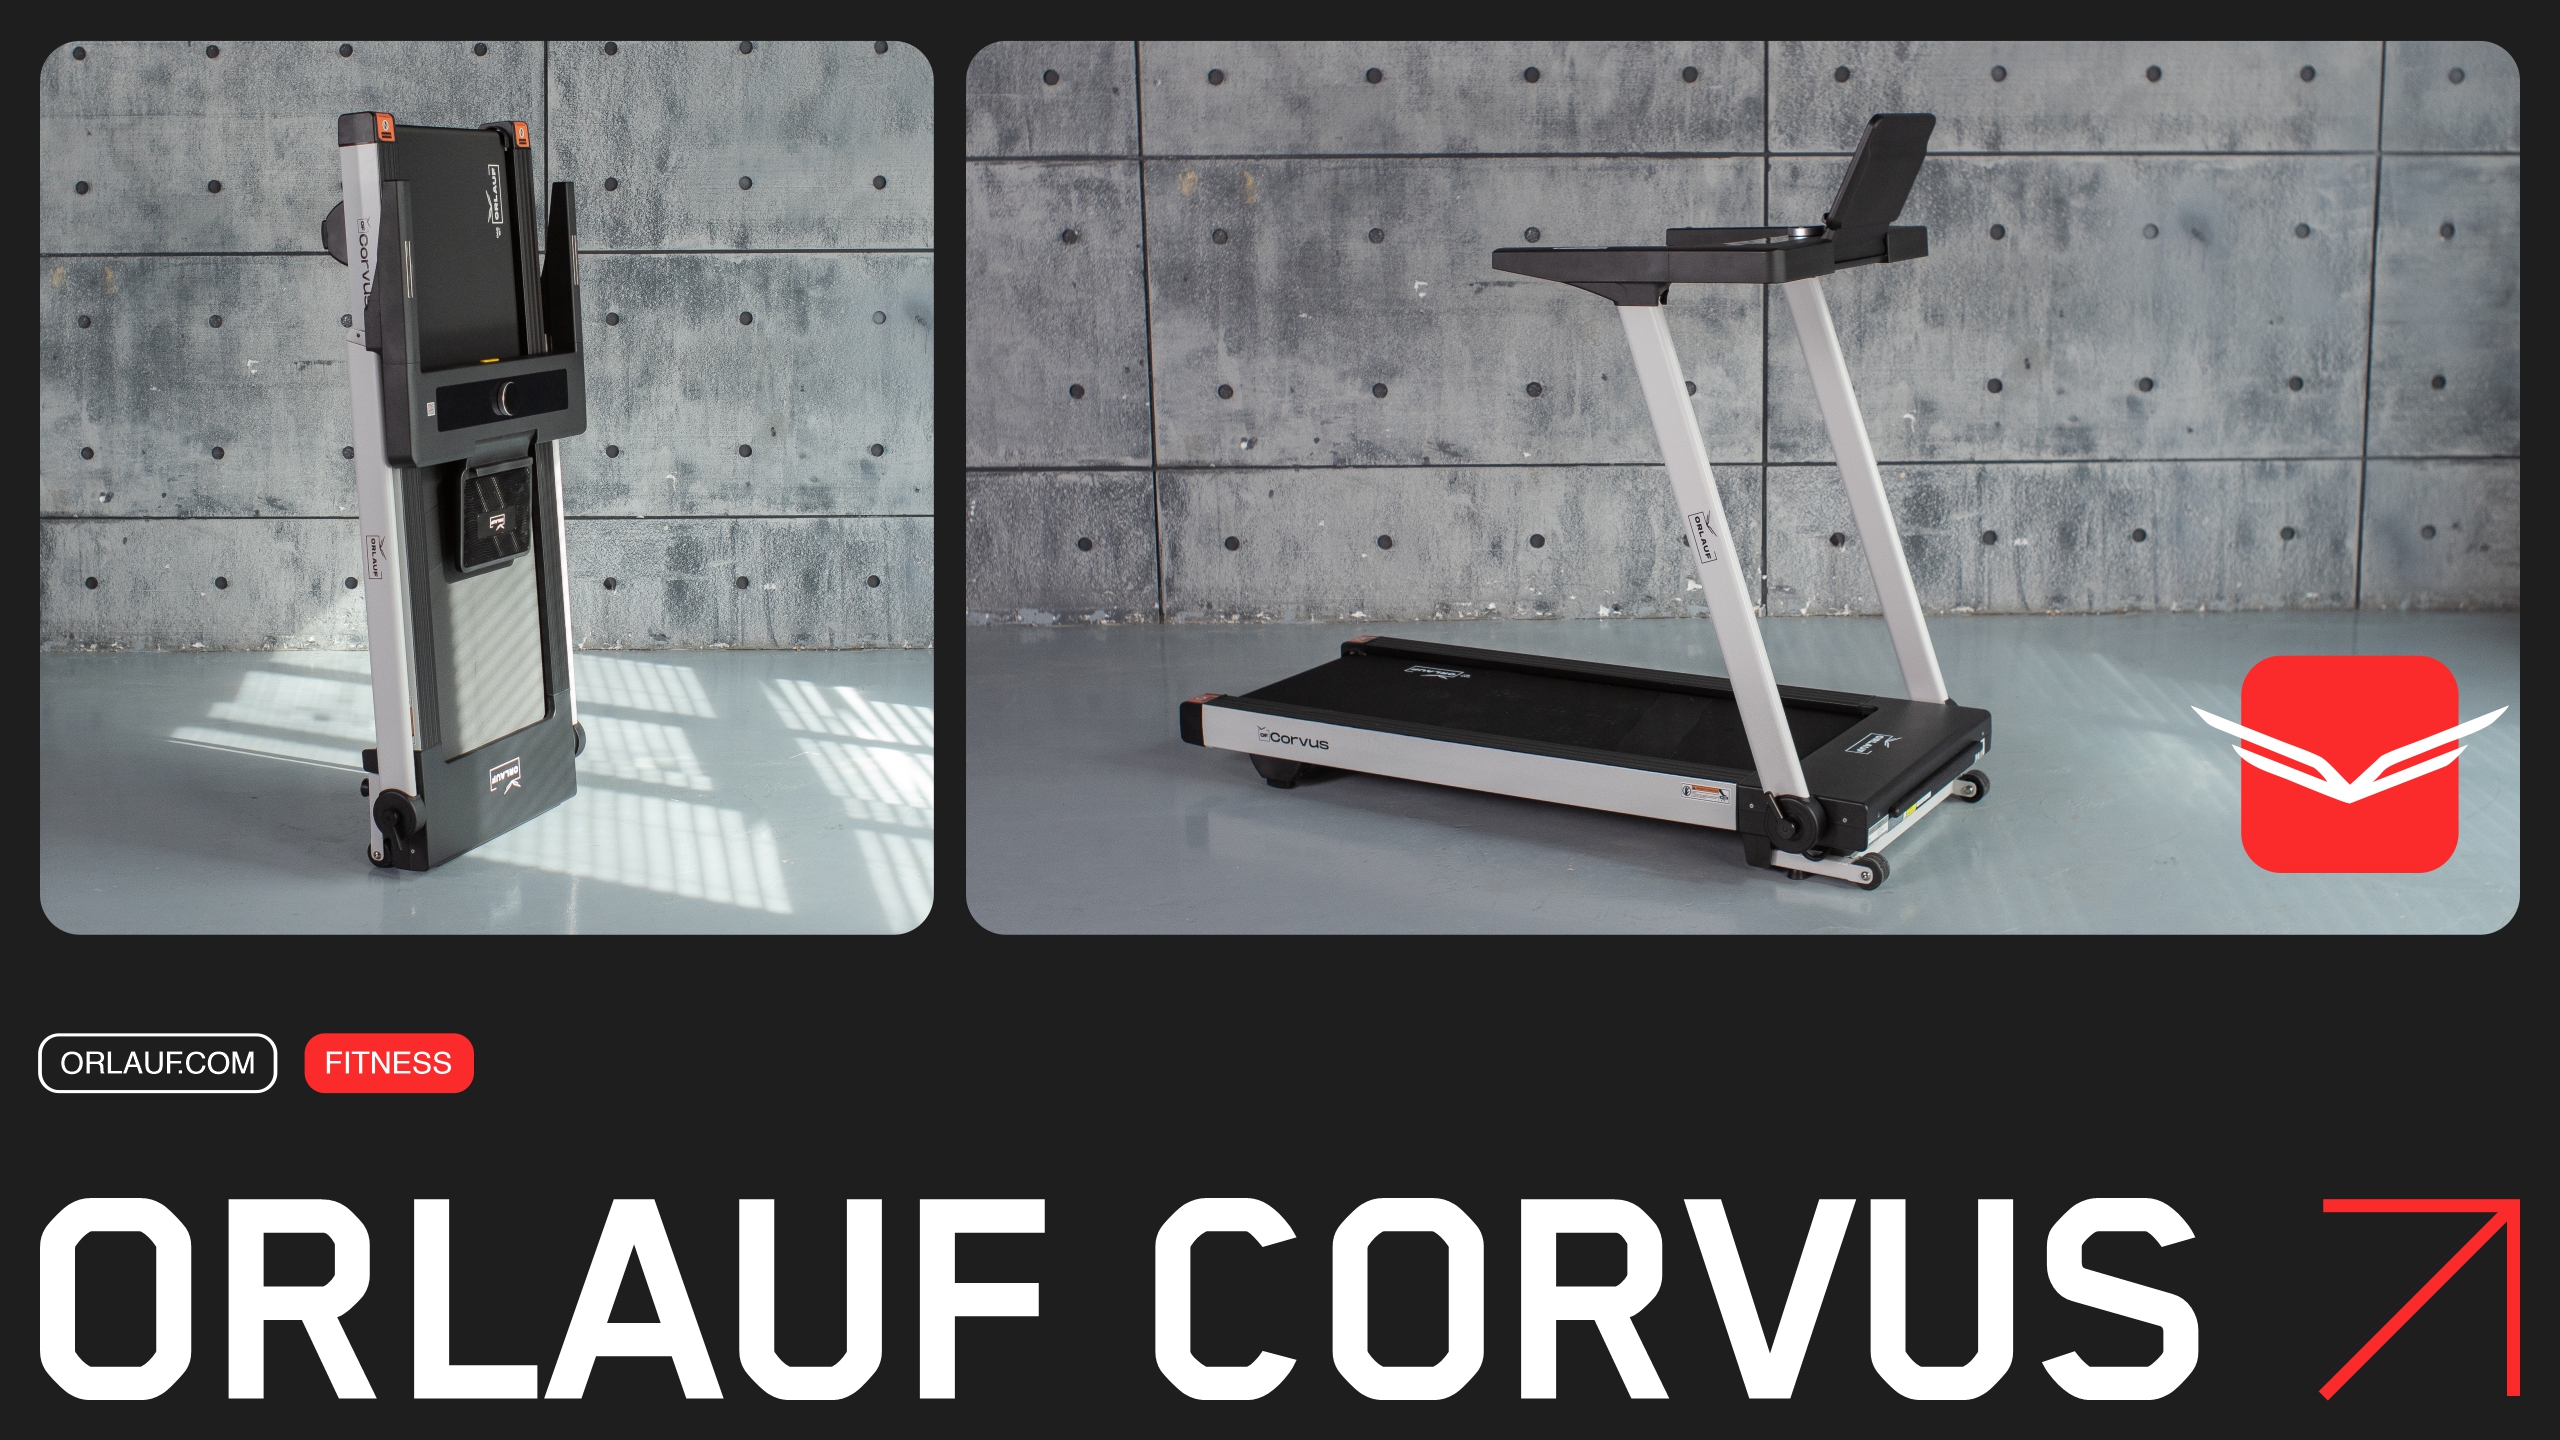 Video review of the treadmill Orlauf Corvus